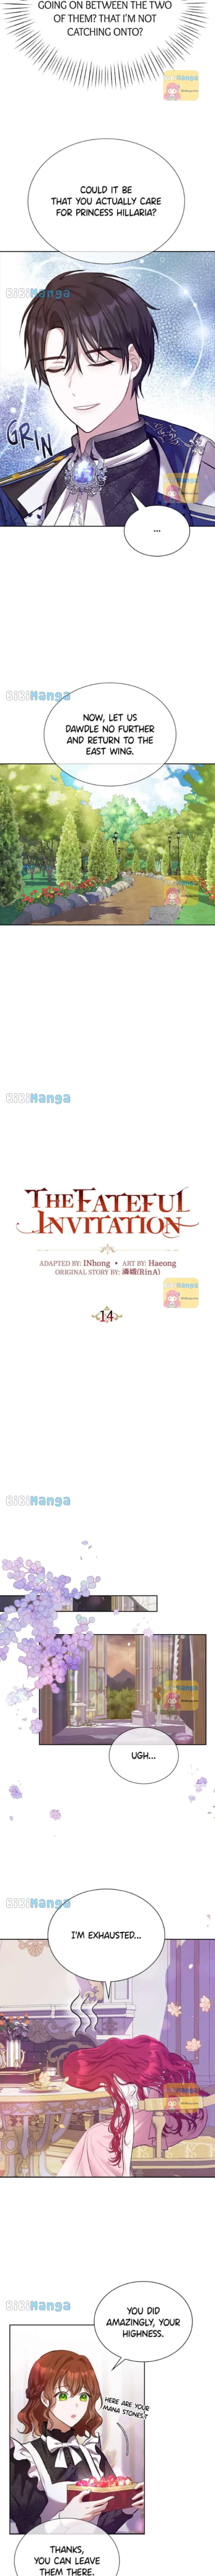 Concubine’s Invitation chapter 14